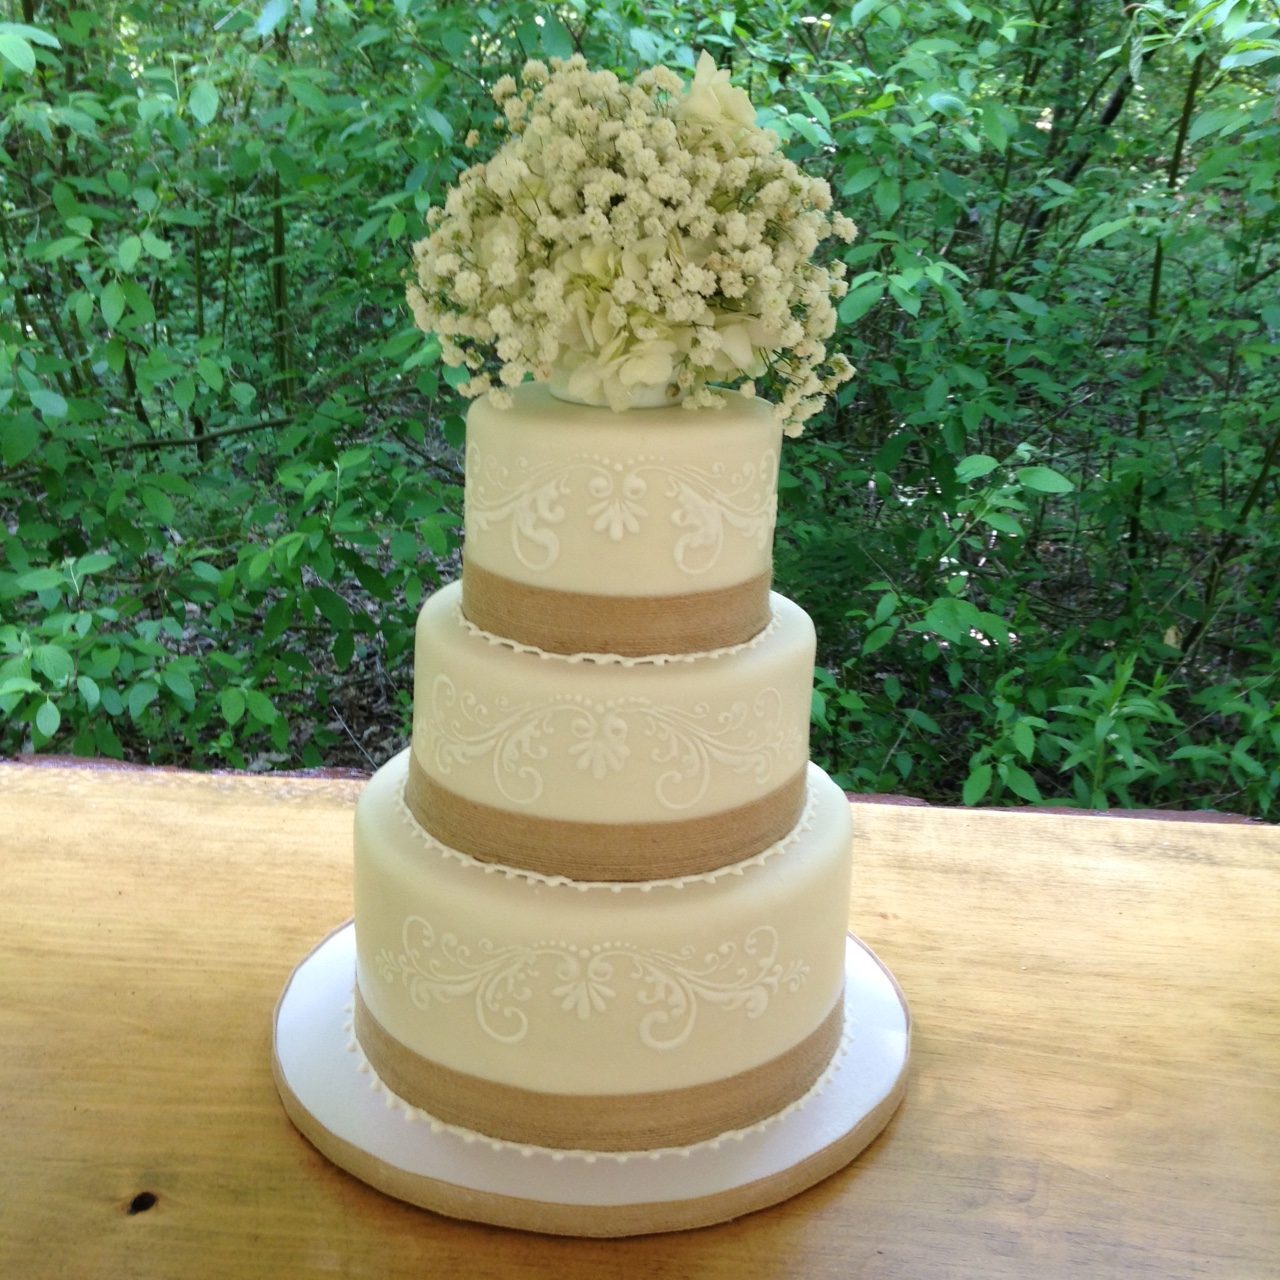 Wedding Cake with burlap